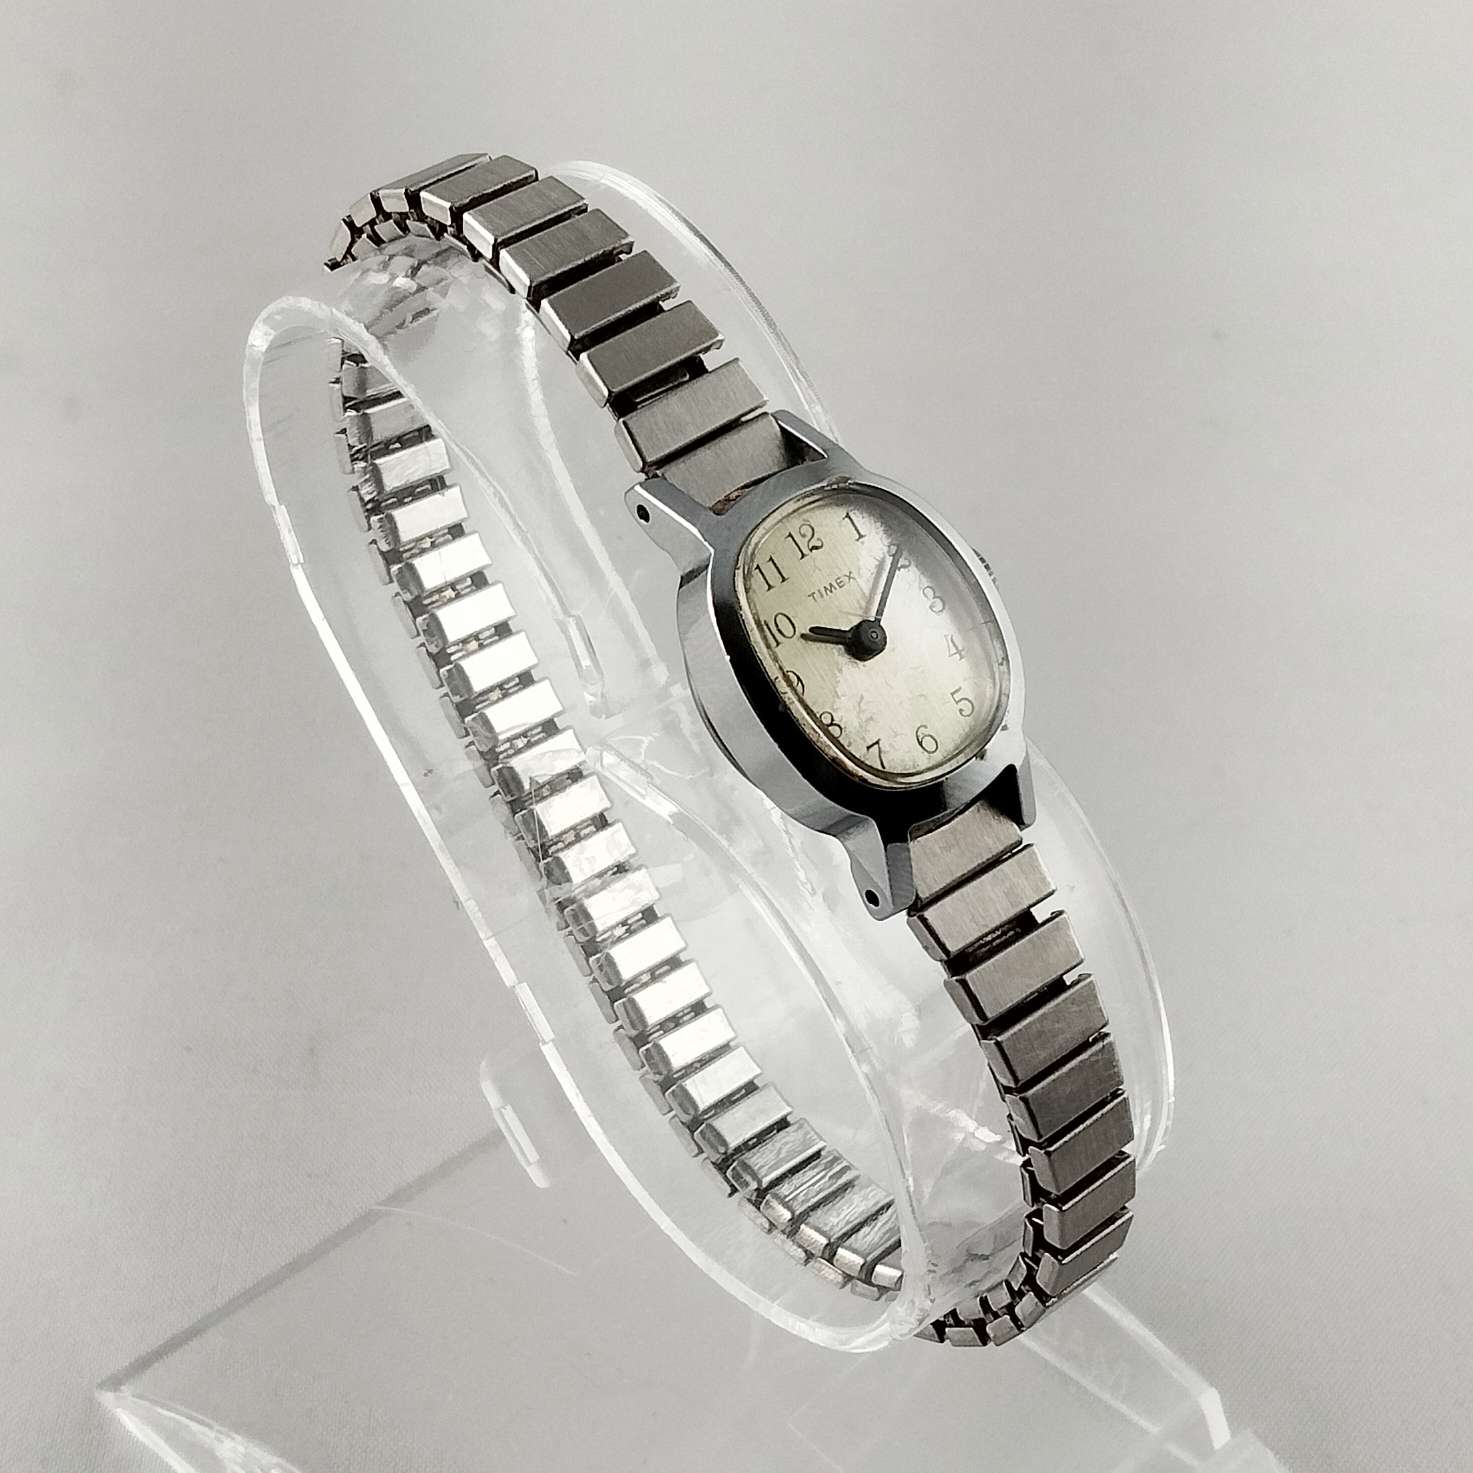 Timex Women's Watch, Oval Dial, Silver Tone, Stretch Strap